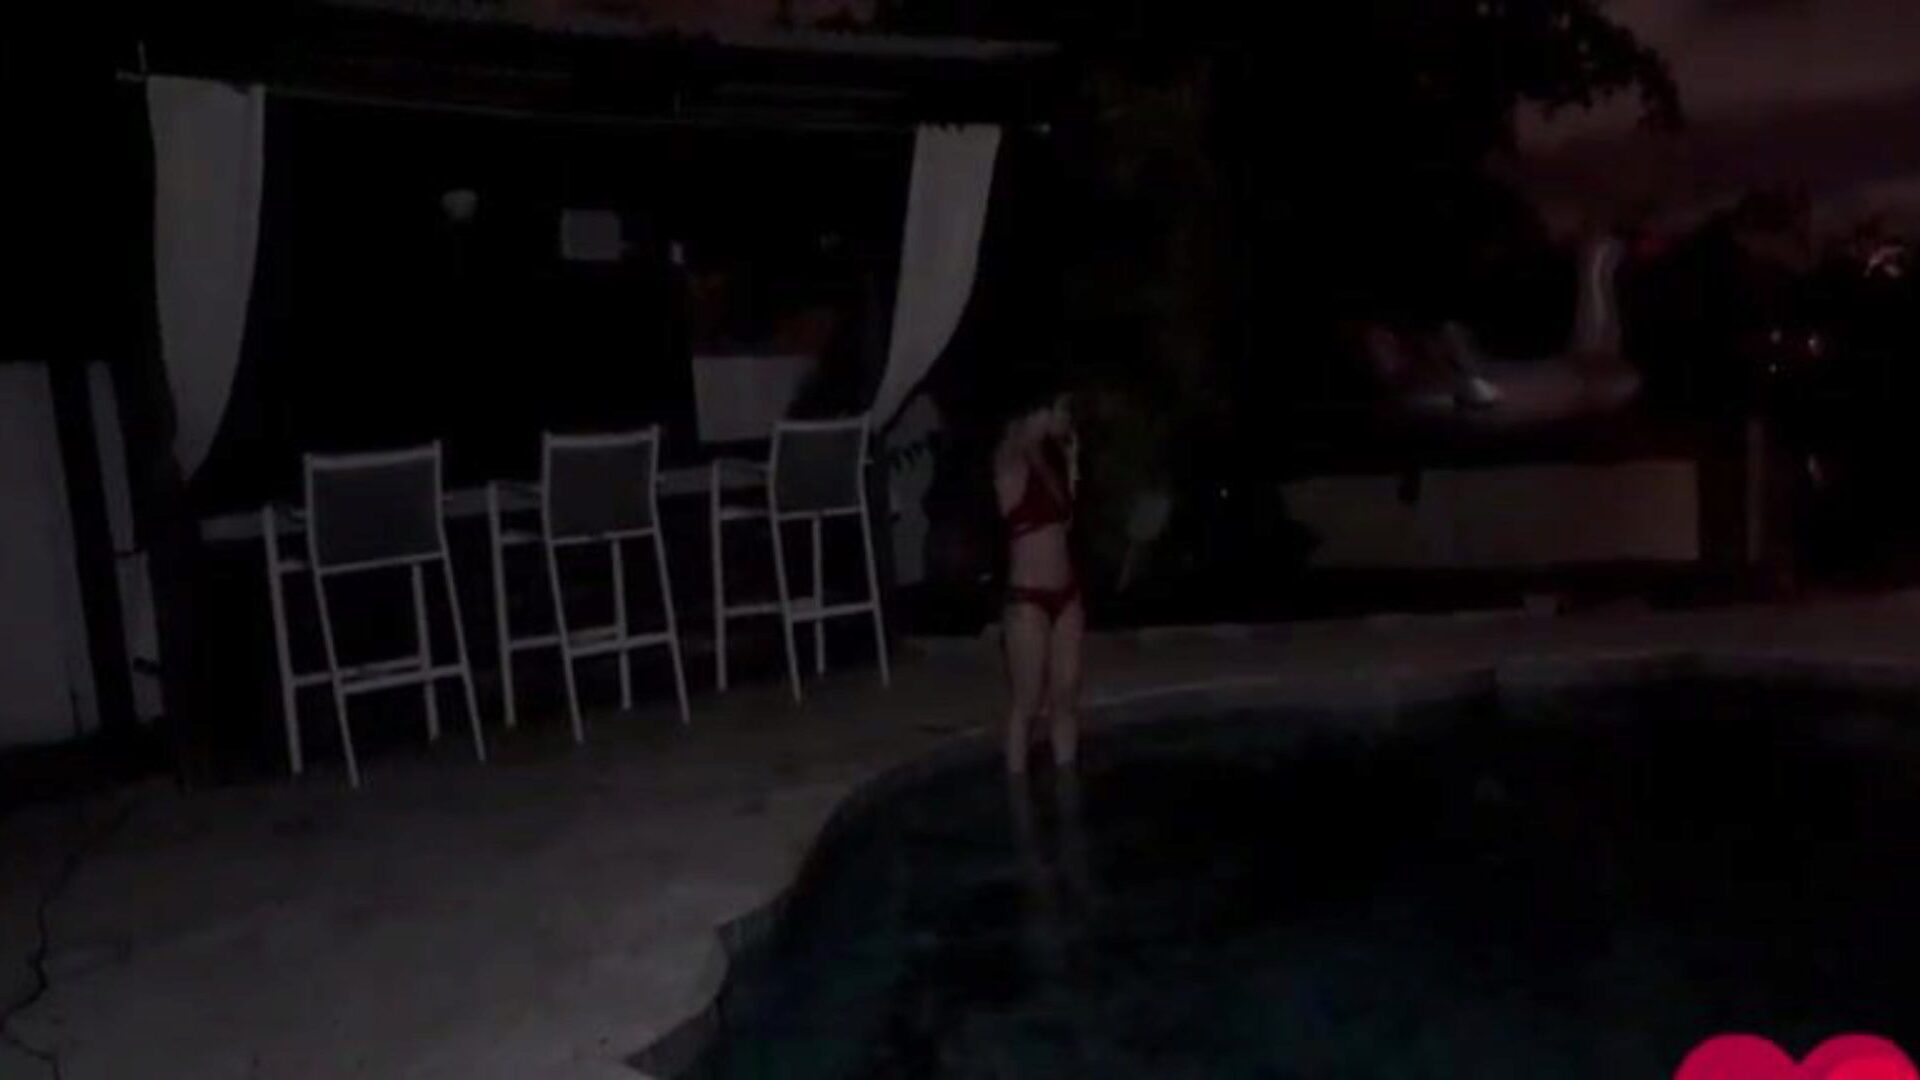 Jade Kush In Smokin' Hawt Oriental Chick Caught Swimming Topless